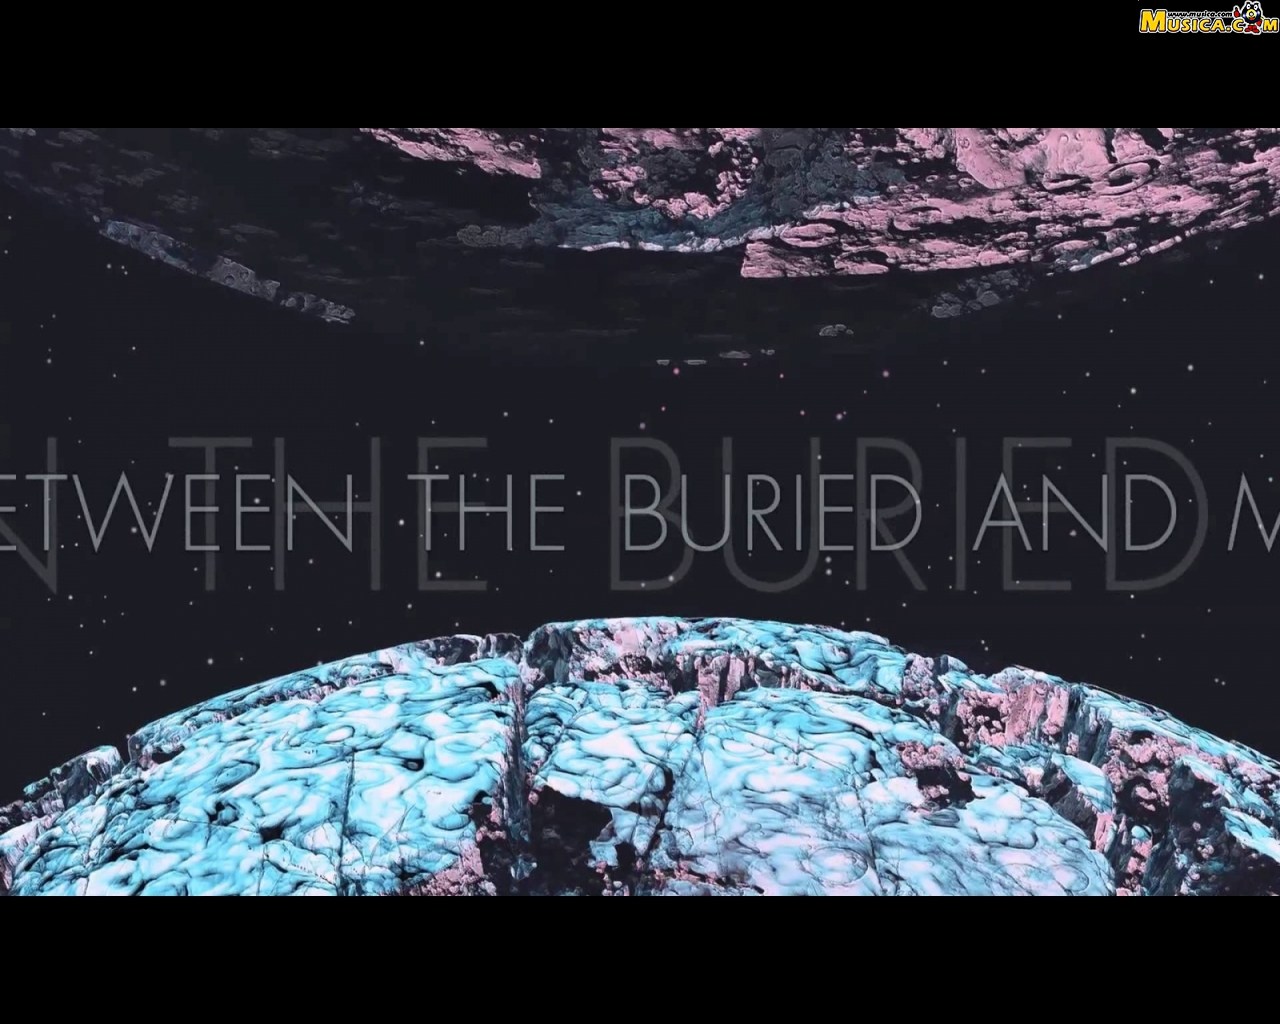 Fondo de pantalla de Between The Buried And Me